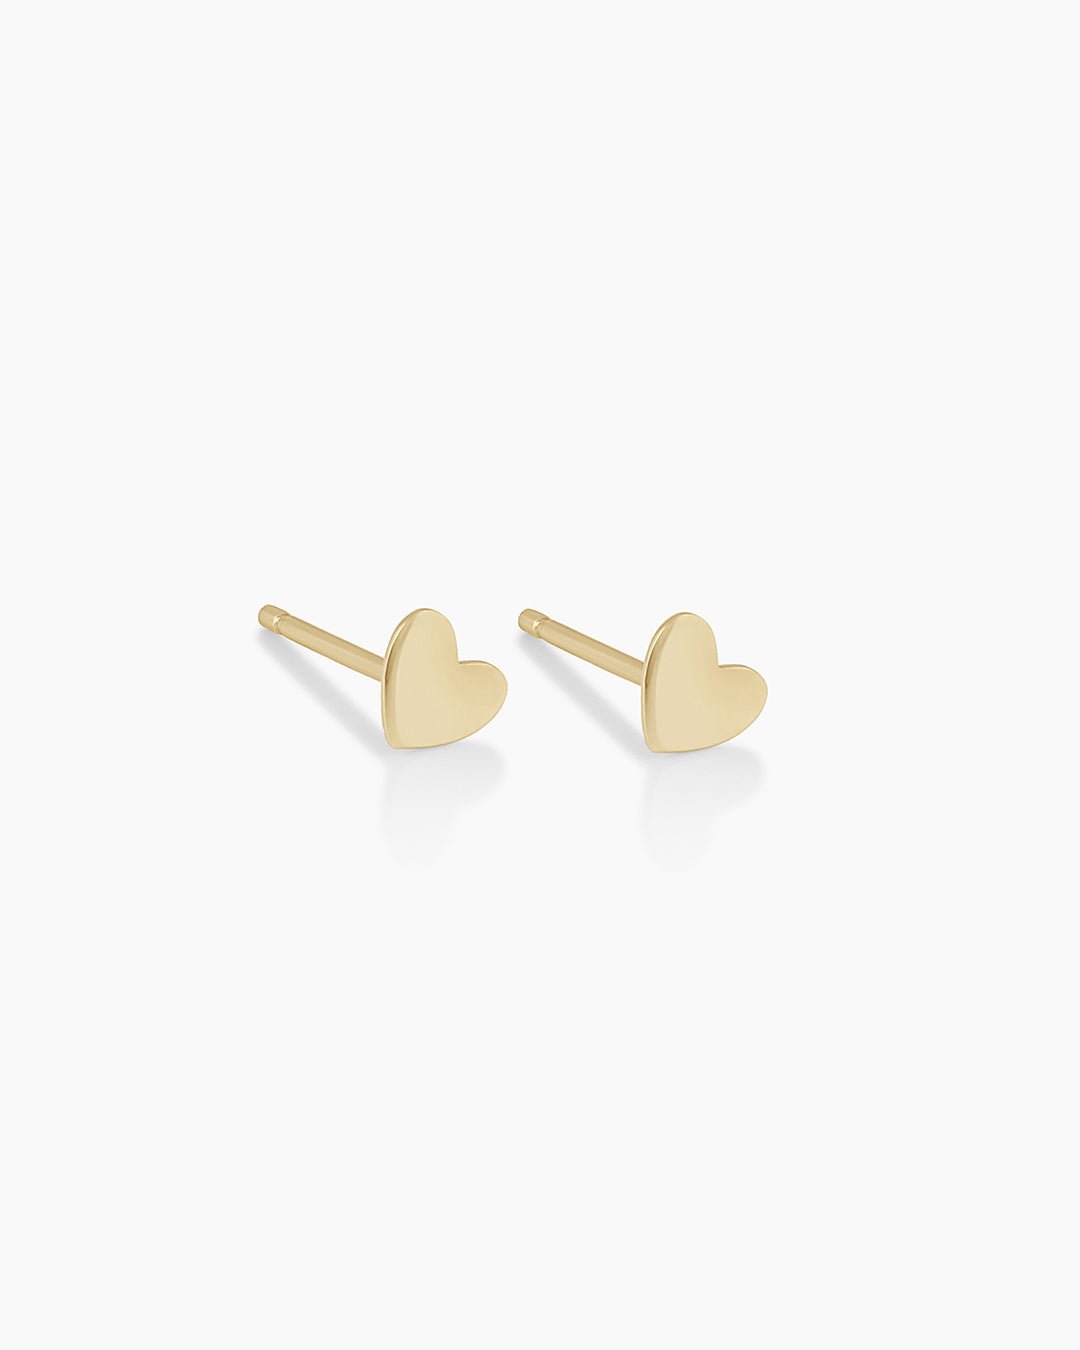 Woman wearing Heart Earring Stud || option::14k Solid Gold, Pair